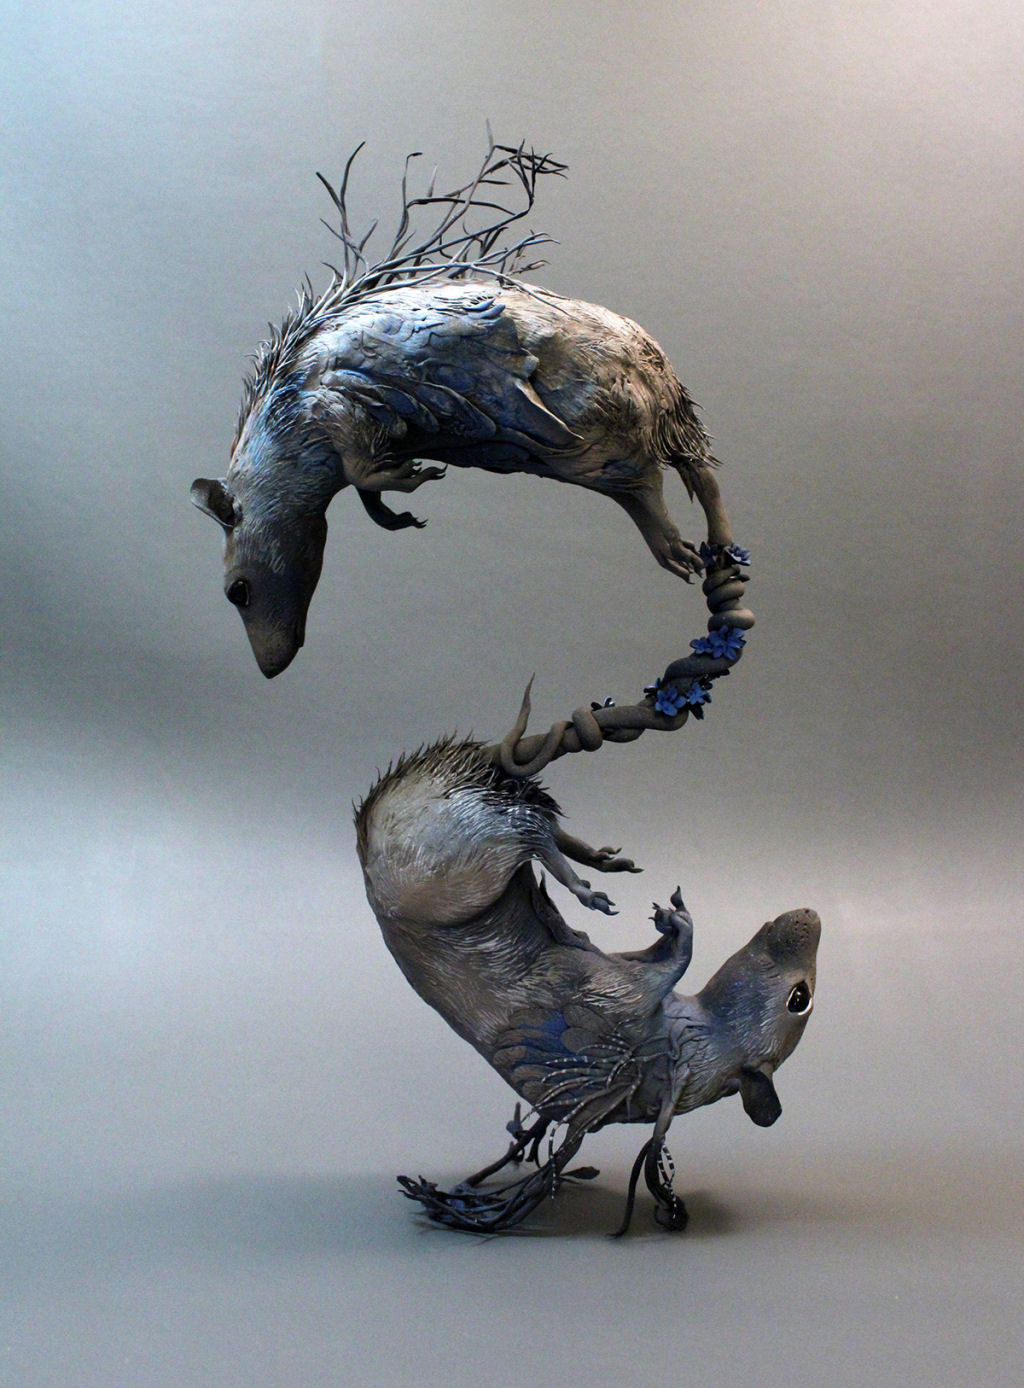 As esculturas surrealistas de Ellen Jewett mesclam plantas e vida animal 06